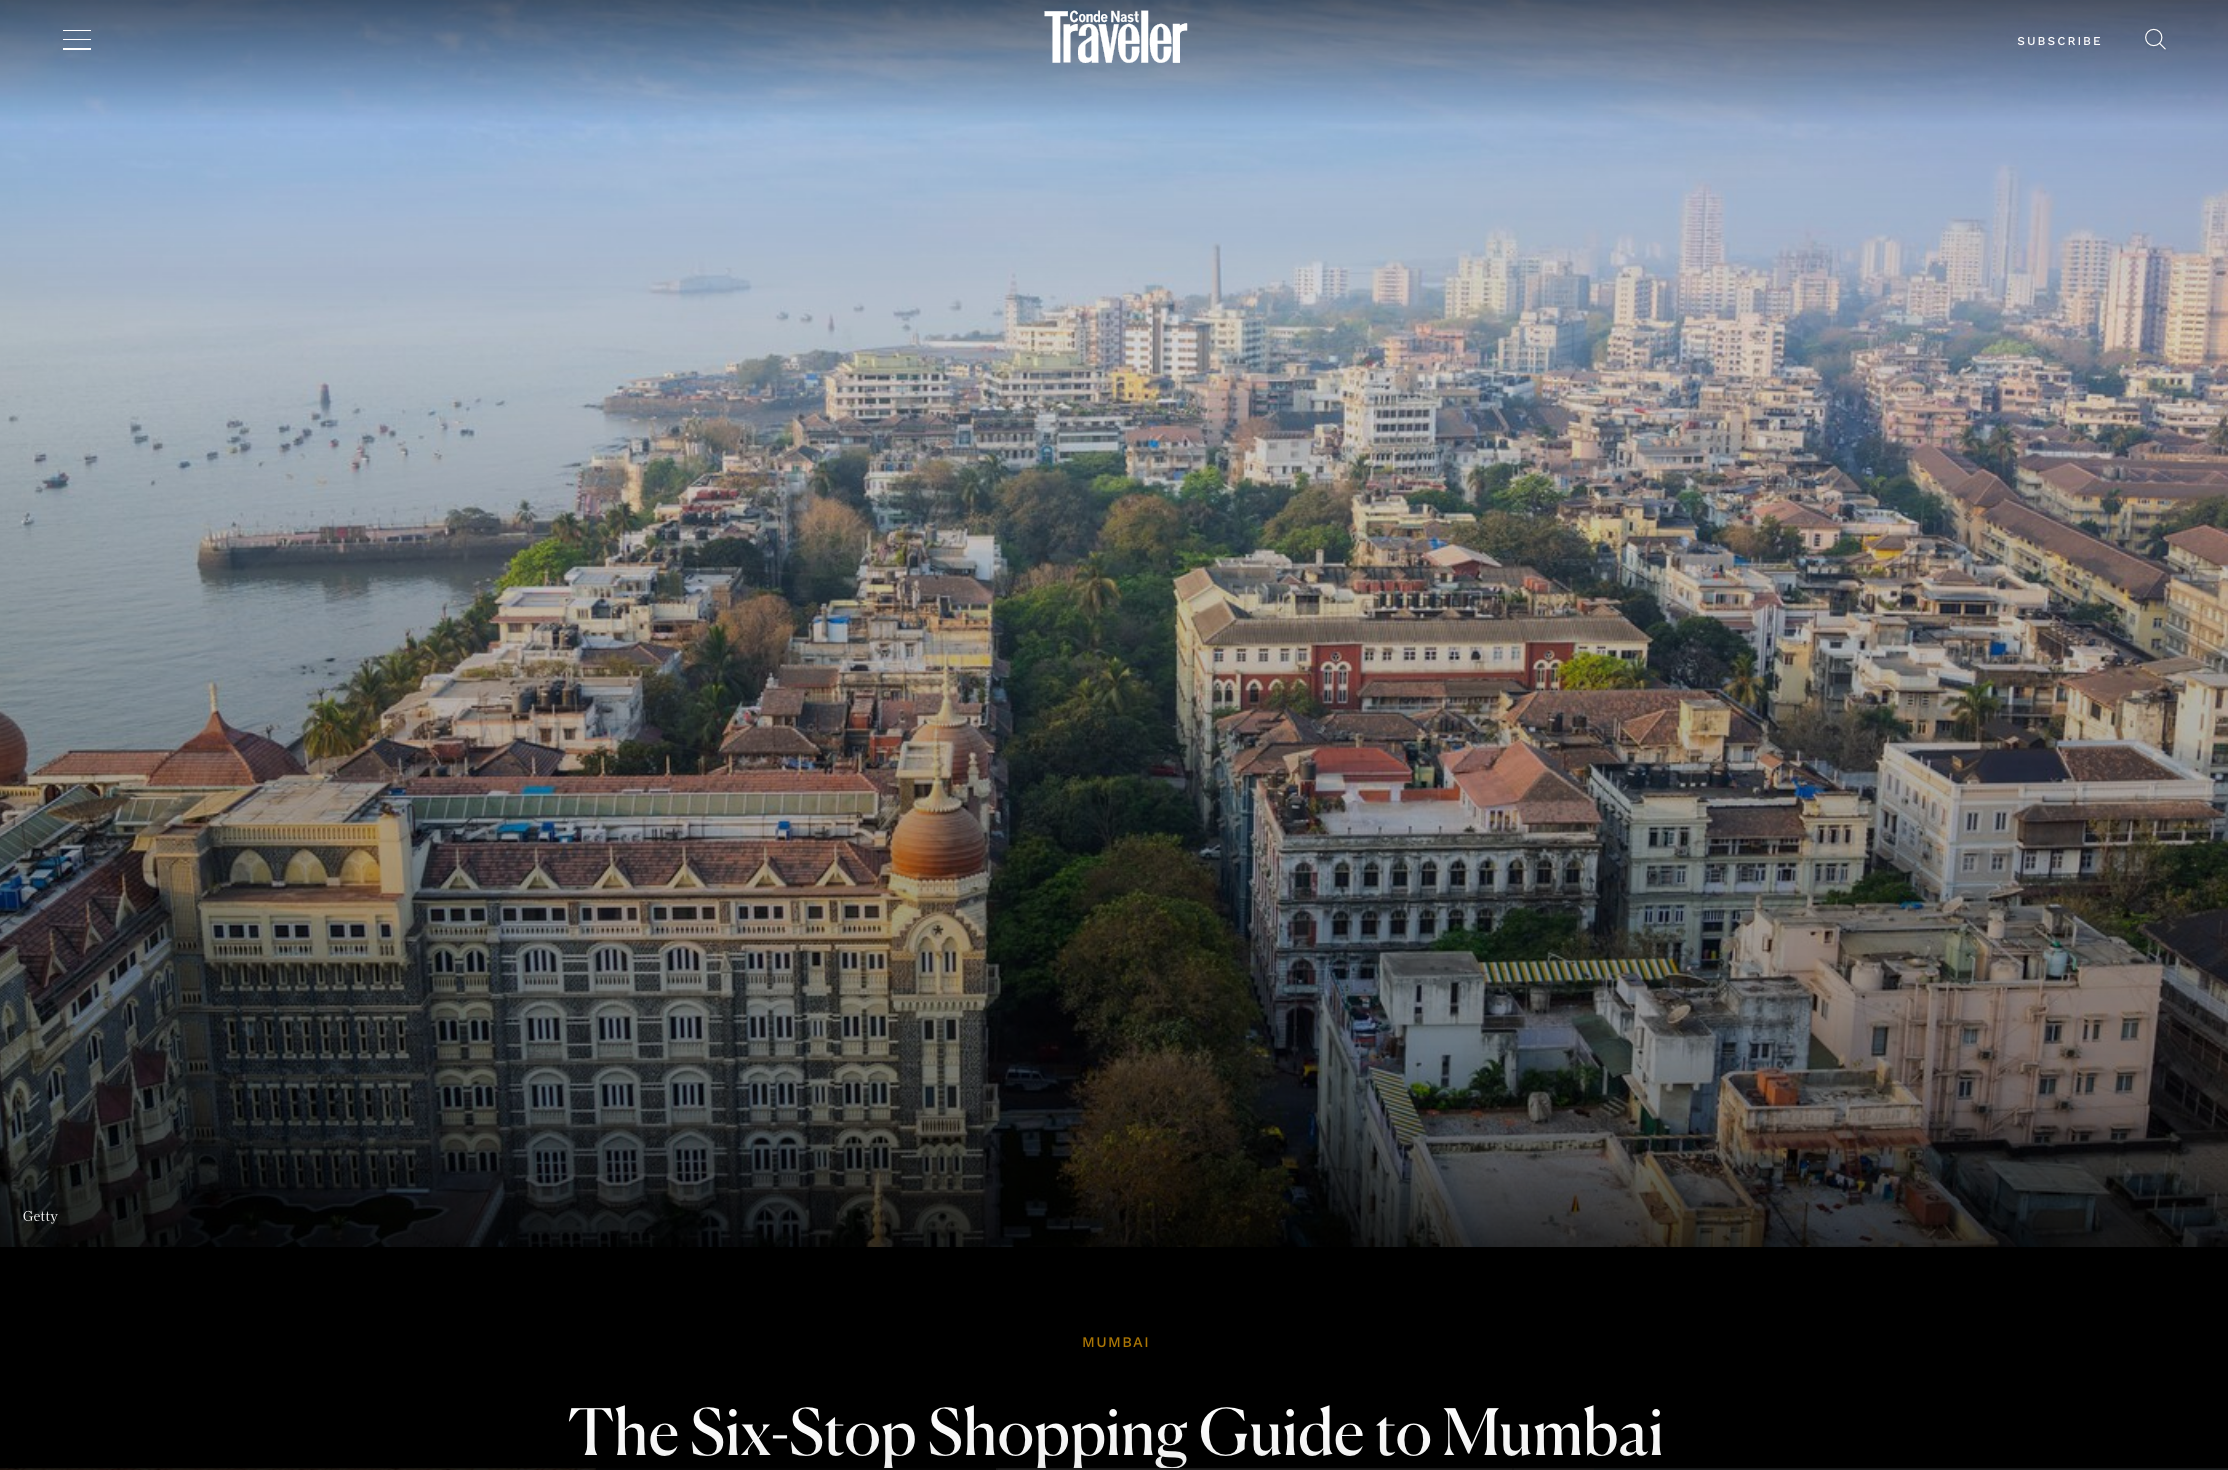 Condé Nast Traveler: The Six-Stop Shopping Guide to Mumbai